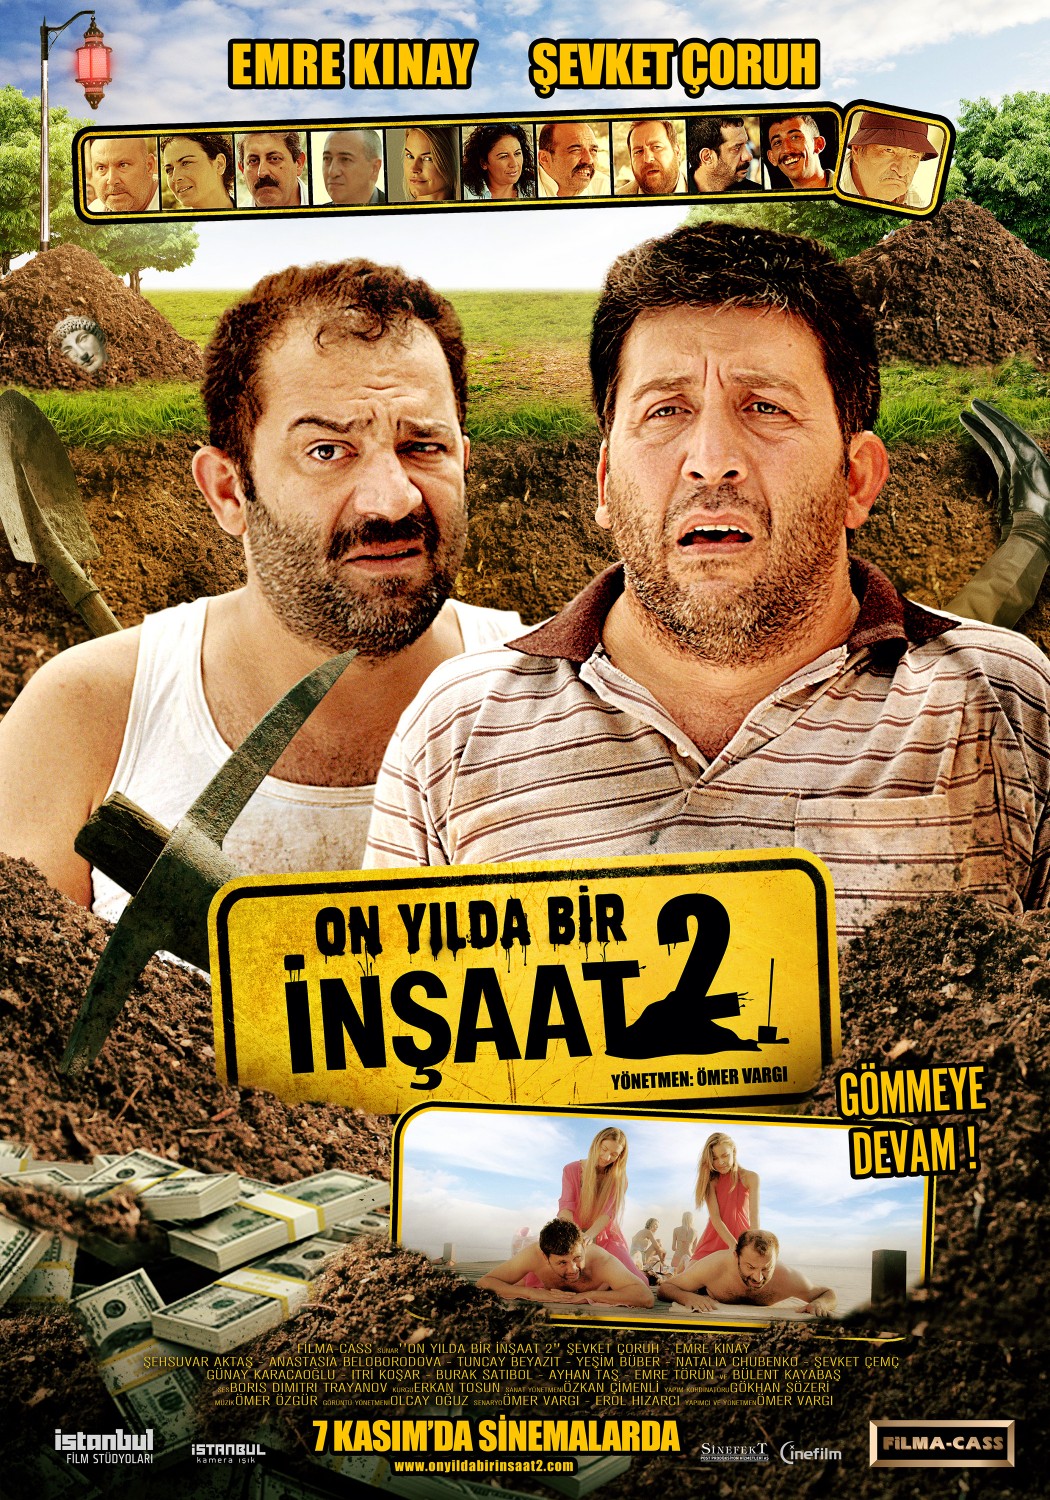 Extra Large Movie Poster Image for On Yilda Bir: Insaat 2 